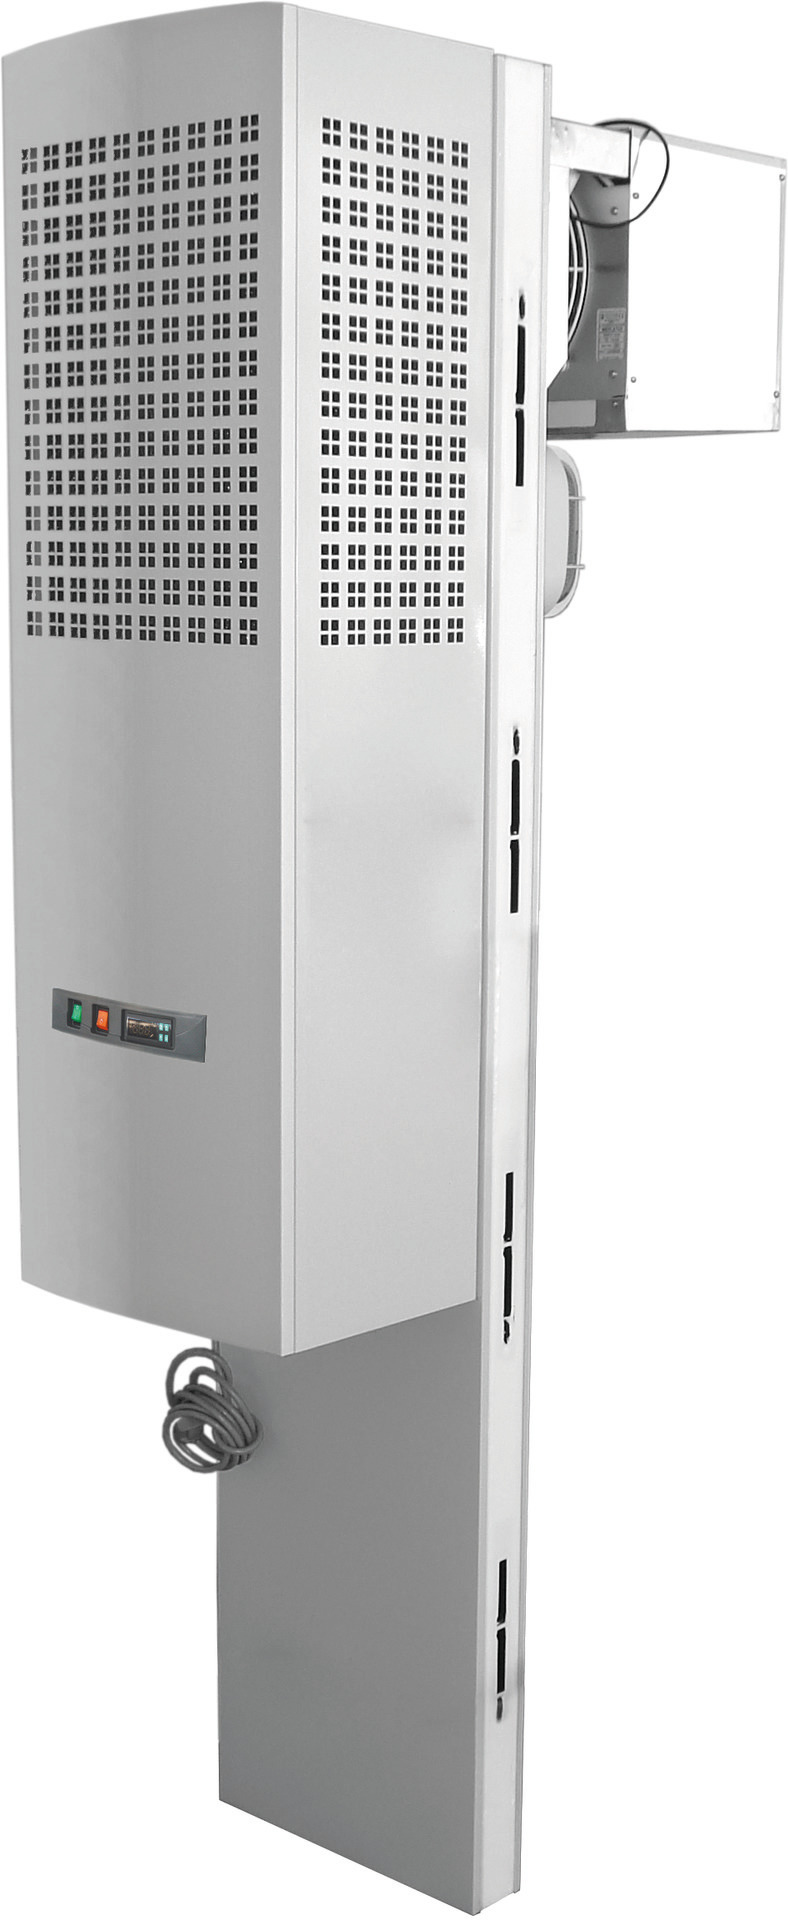 Tiefkühlaggregat für Kühlzelle 661075, 661076, 661080, 661081